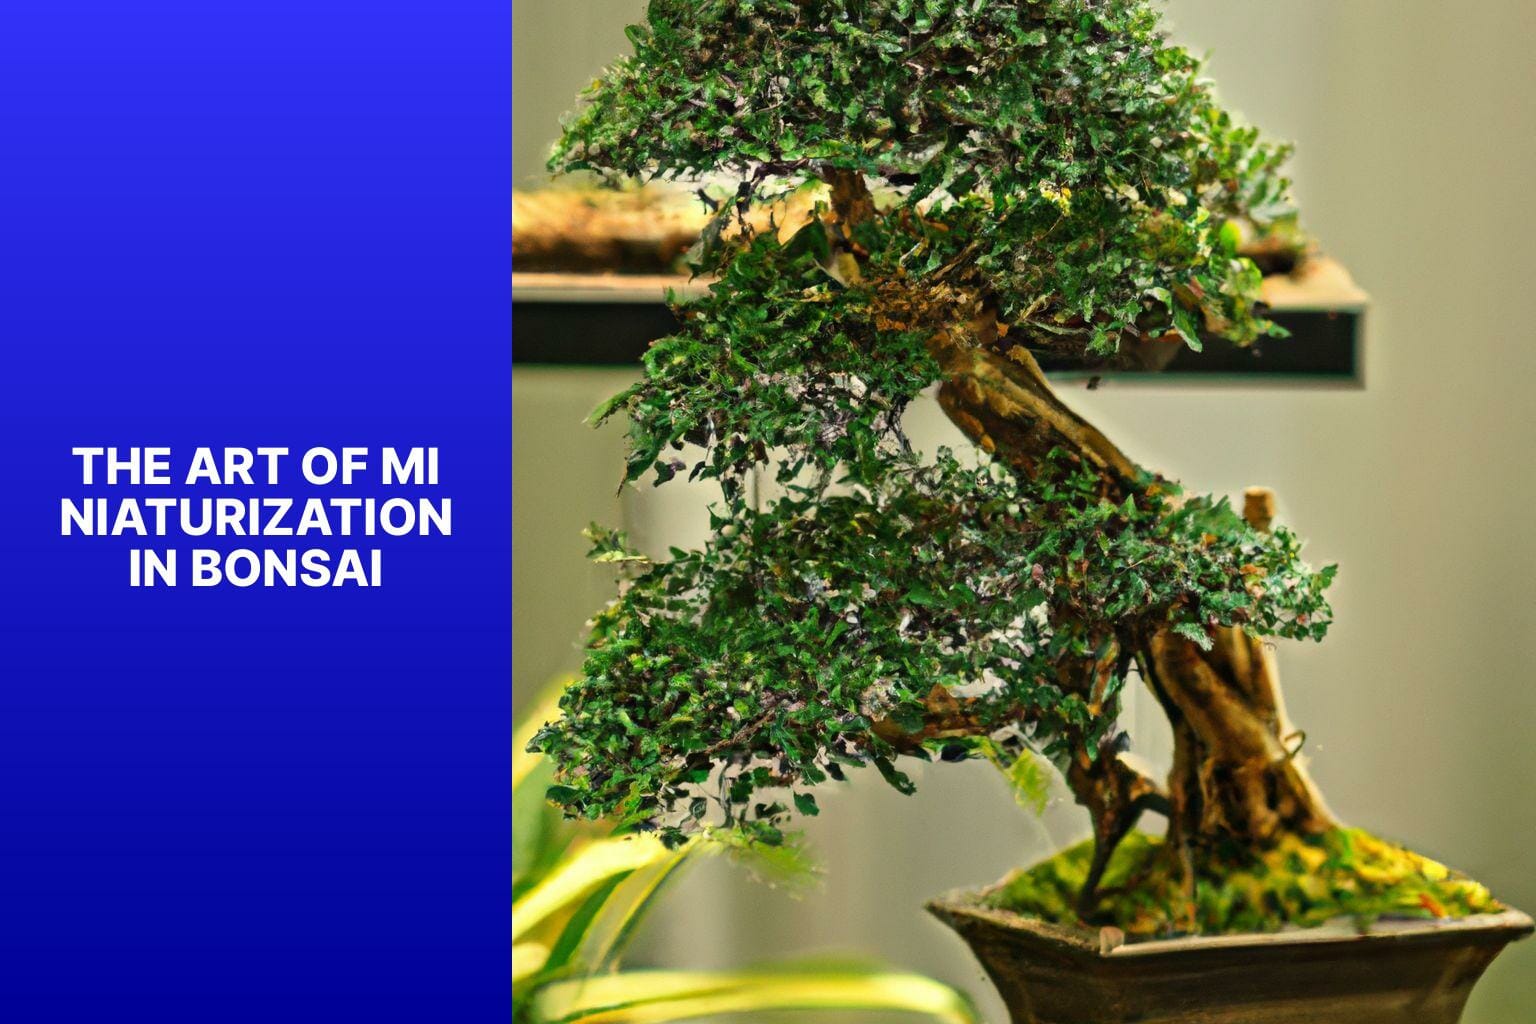 The Art of Miniaturization in Bonsai - why are bonsai trees so small 